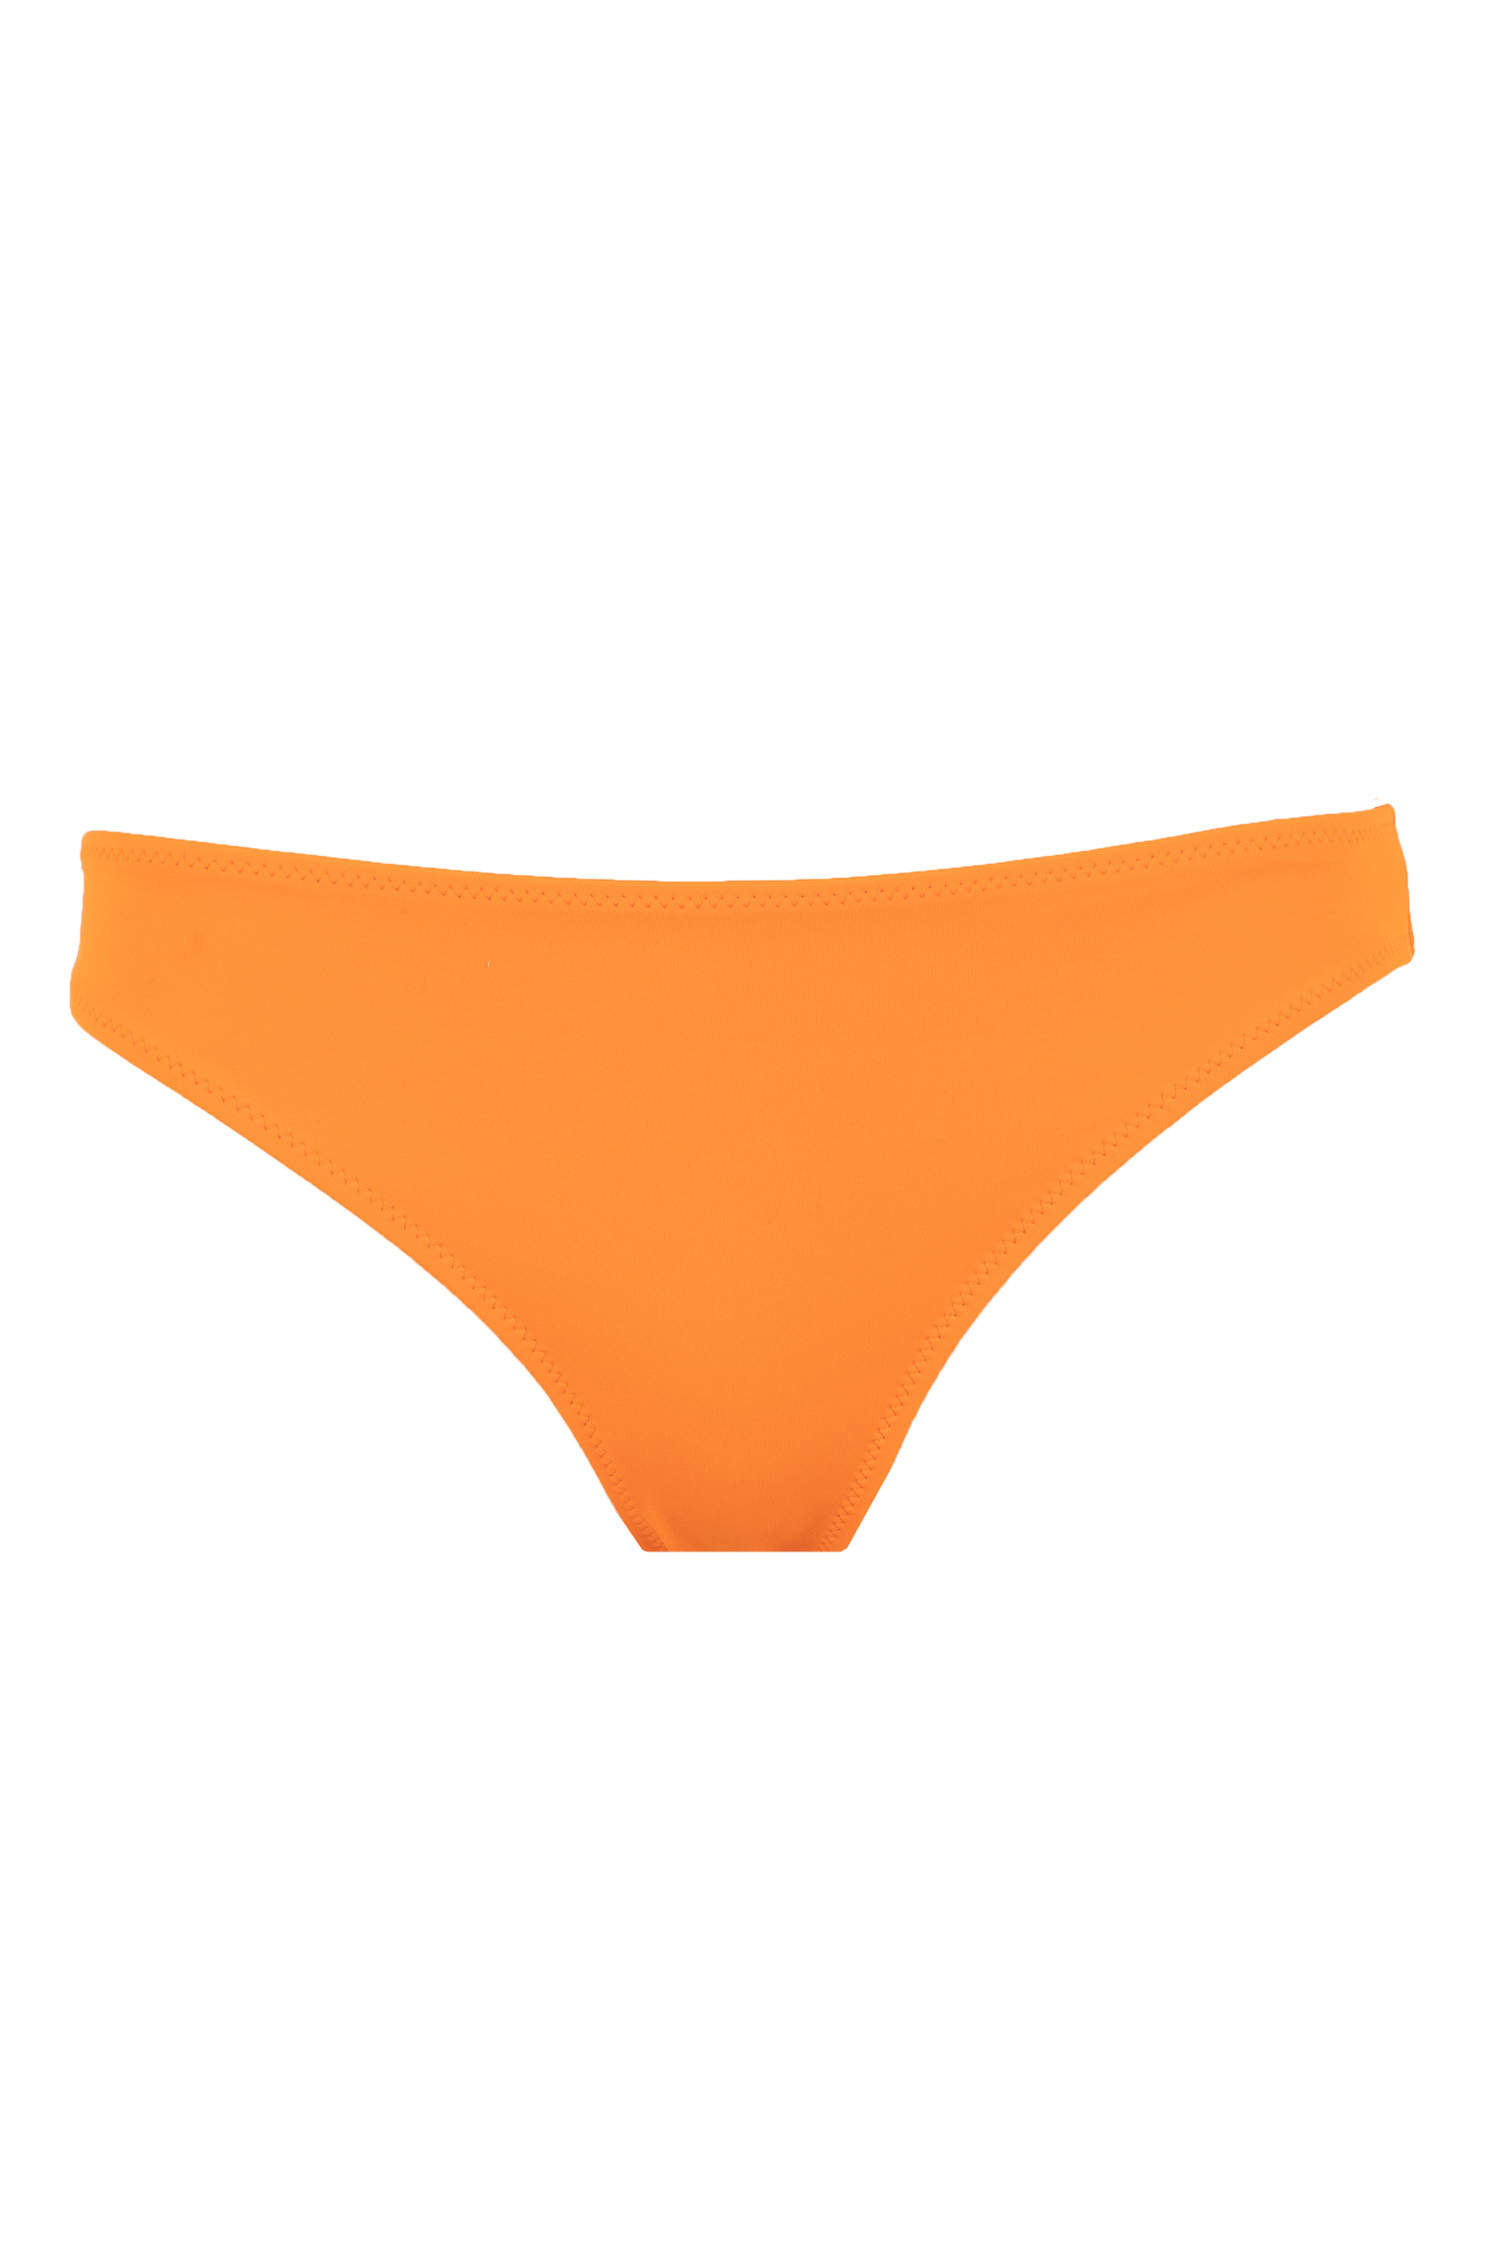 Orange WOMAN Fall in Love Regular Fit Bikini Bottom 2766505 | DeFacto